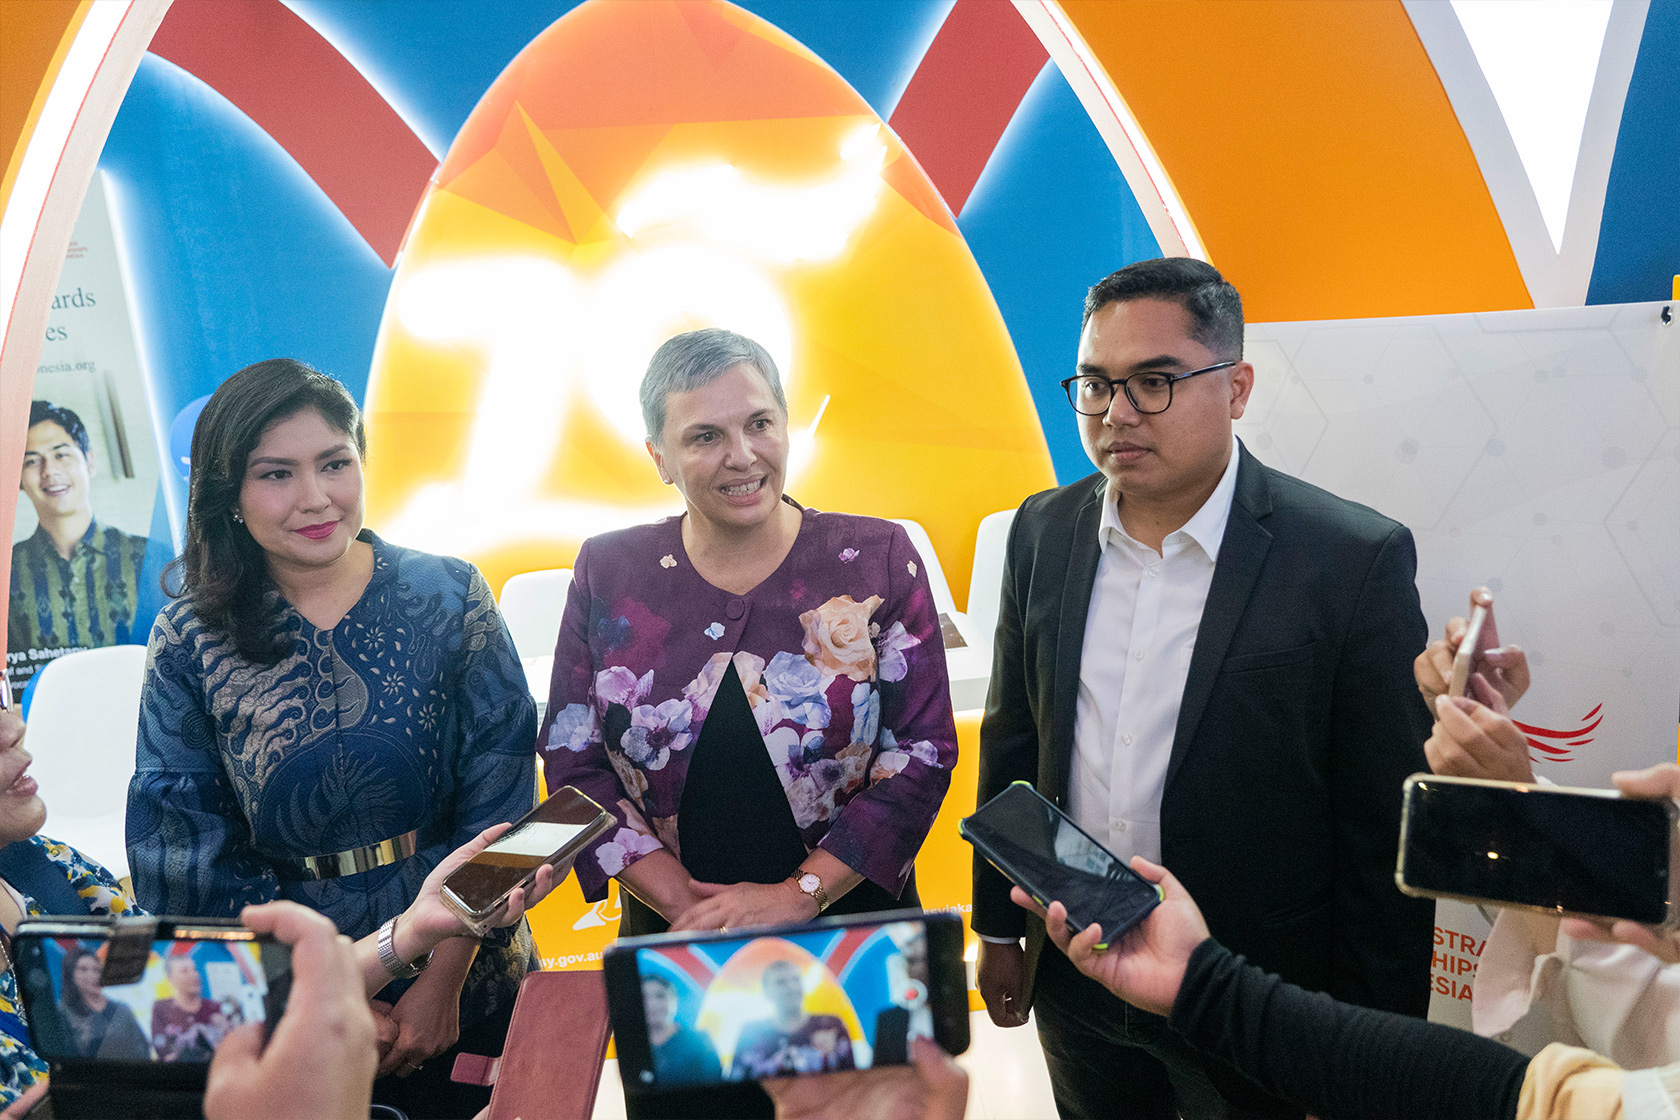 The Australian Ambassador to Indonesia had a doorstep interview with Indonesia’s media, accompanied by the Alumni Awards winner Fahd Pahdepie and MC Valerina Daniel.